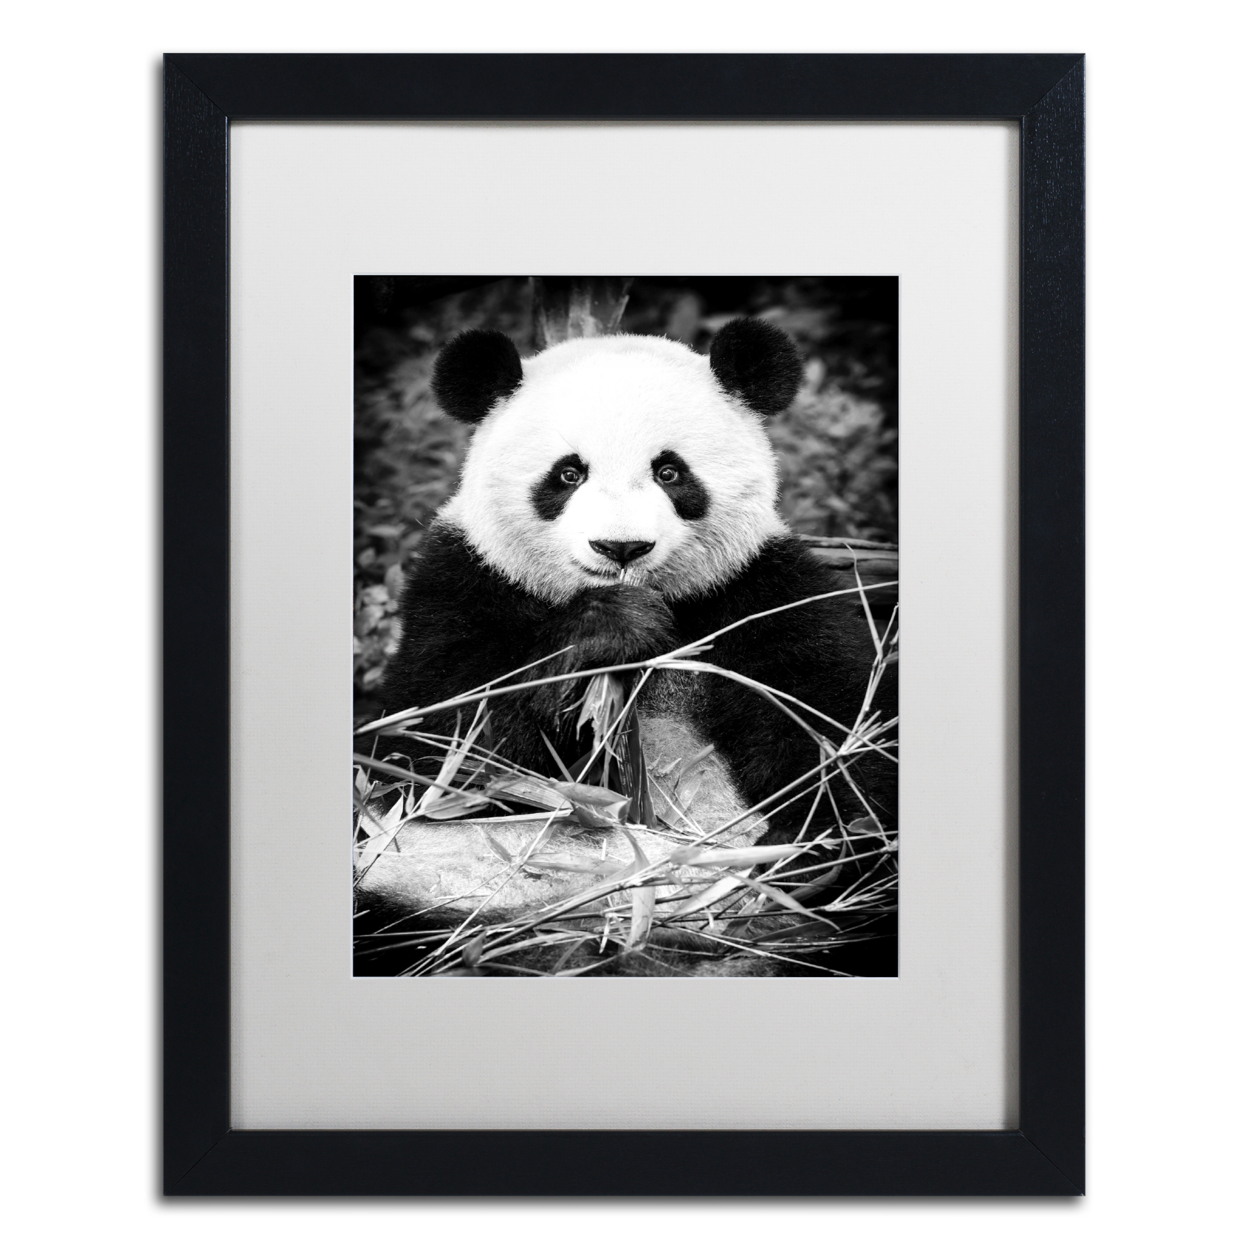 Philippe Hugonnard 'Panda' Black Wooden Framed Art 18 X 22 Inches